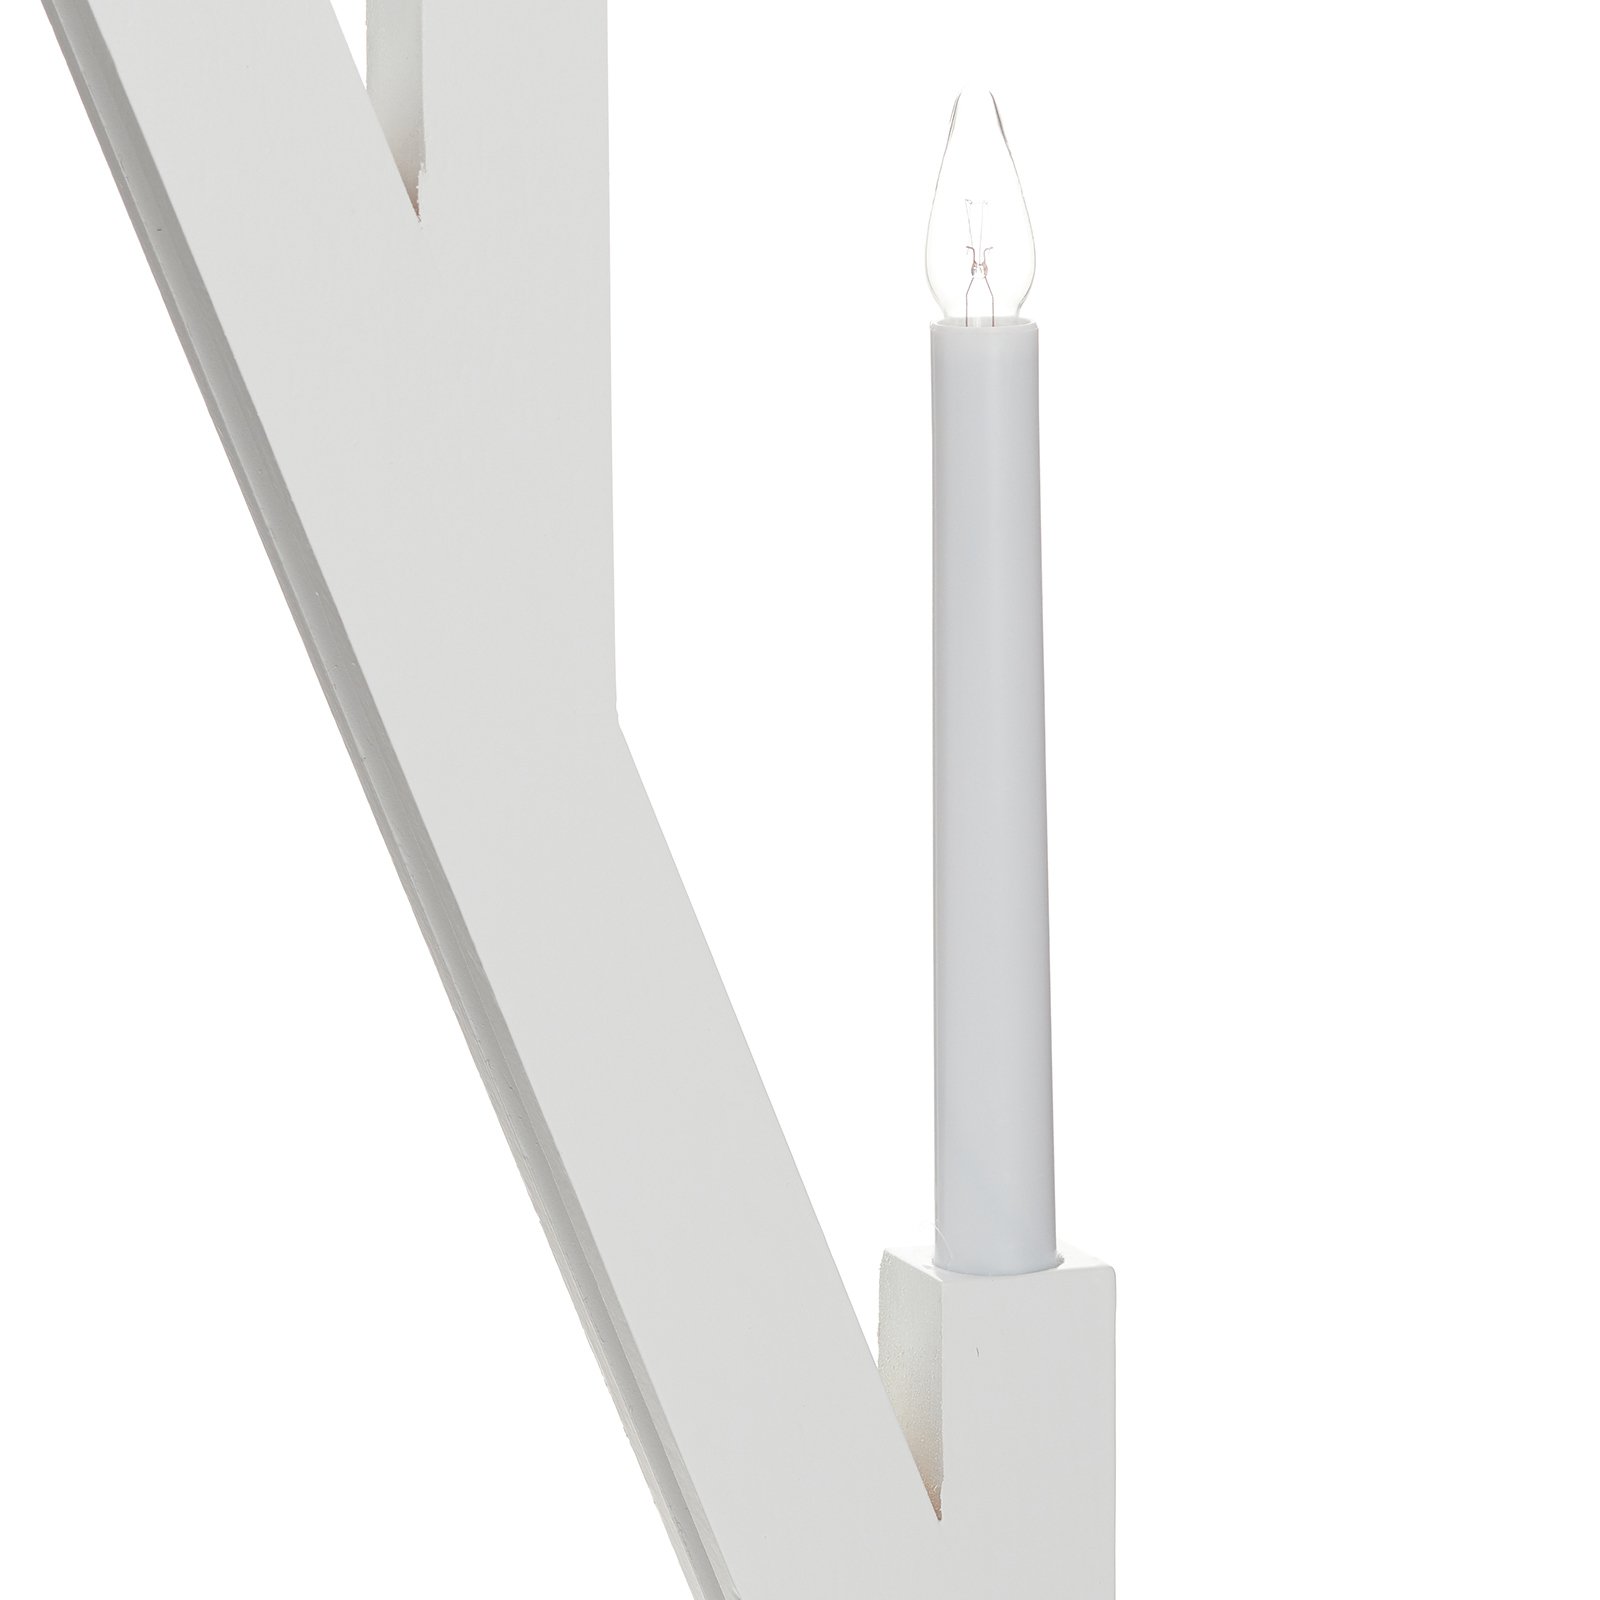 Candleholder Bjurfors in a linear design